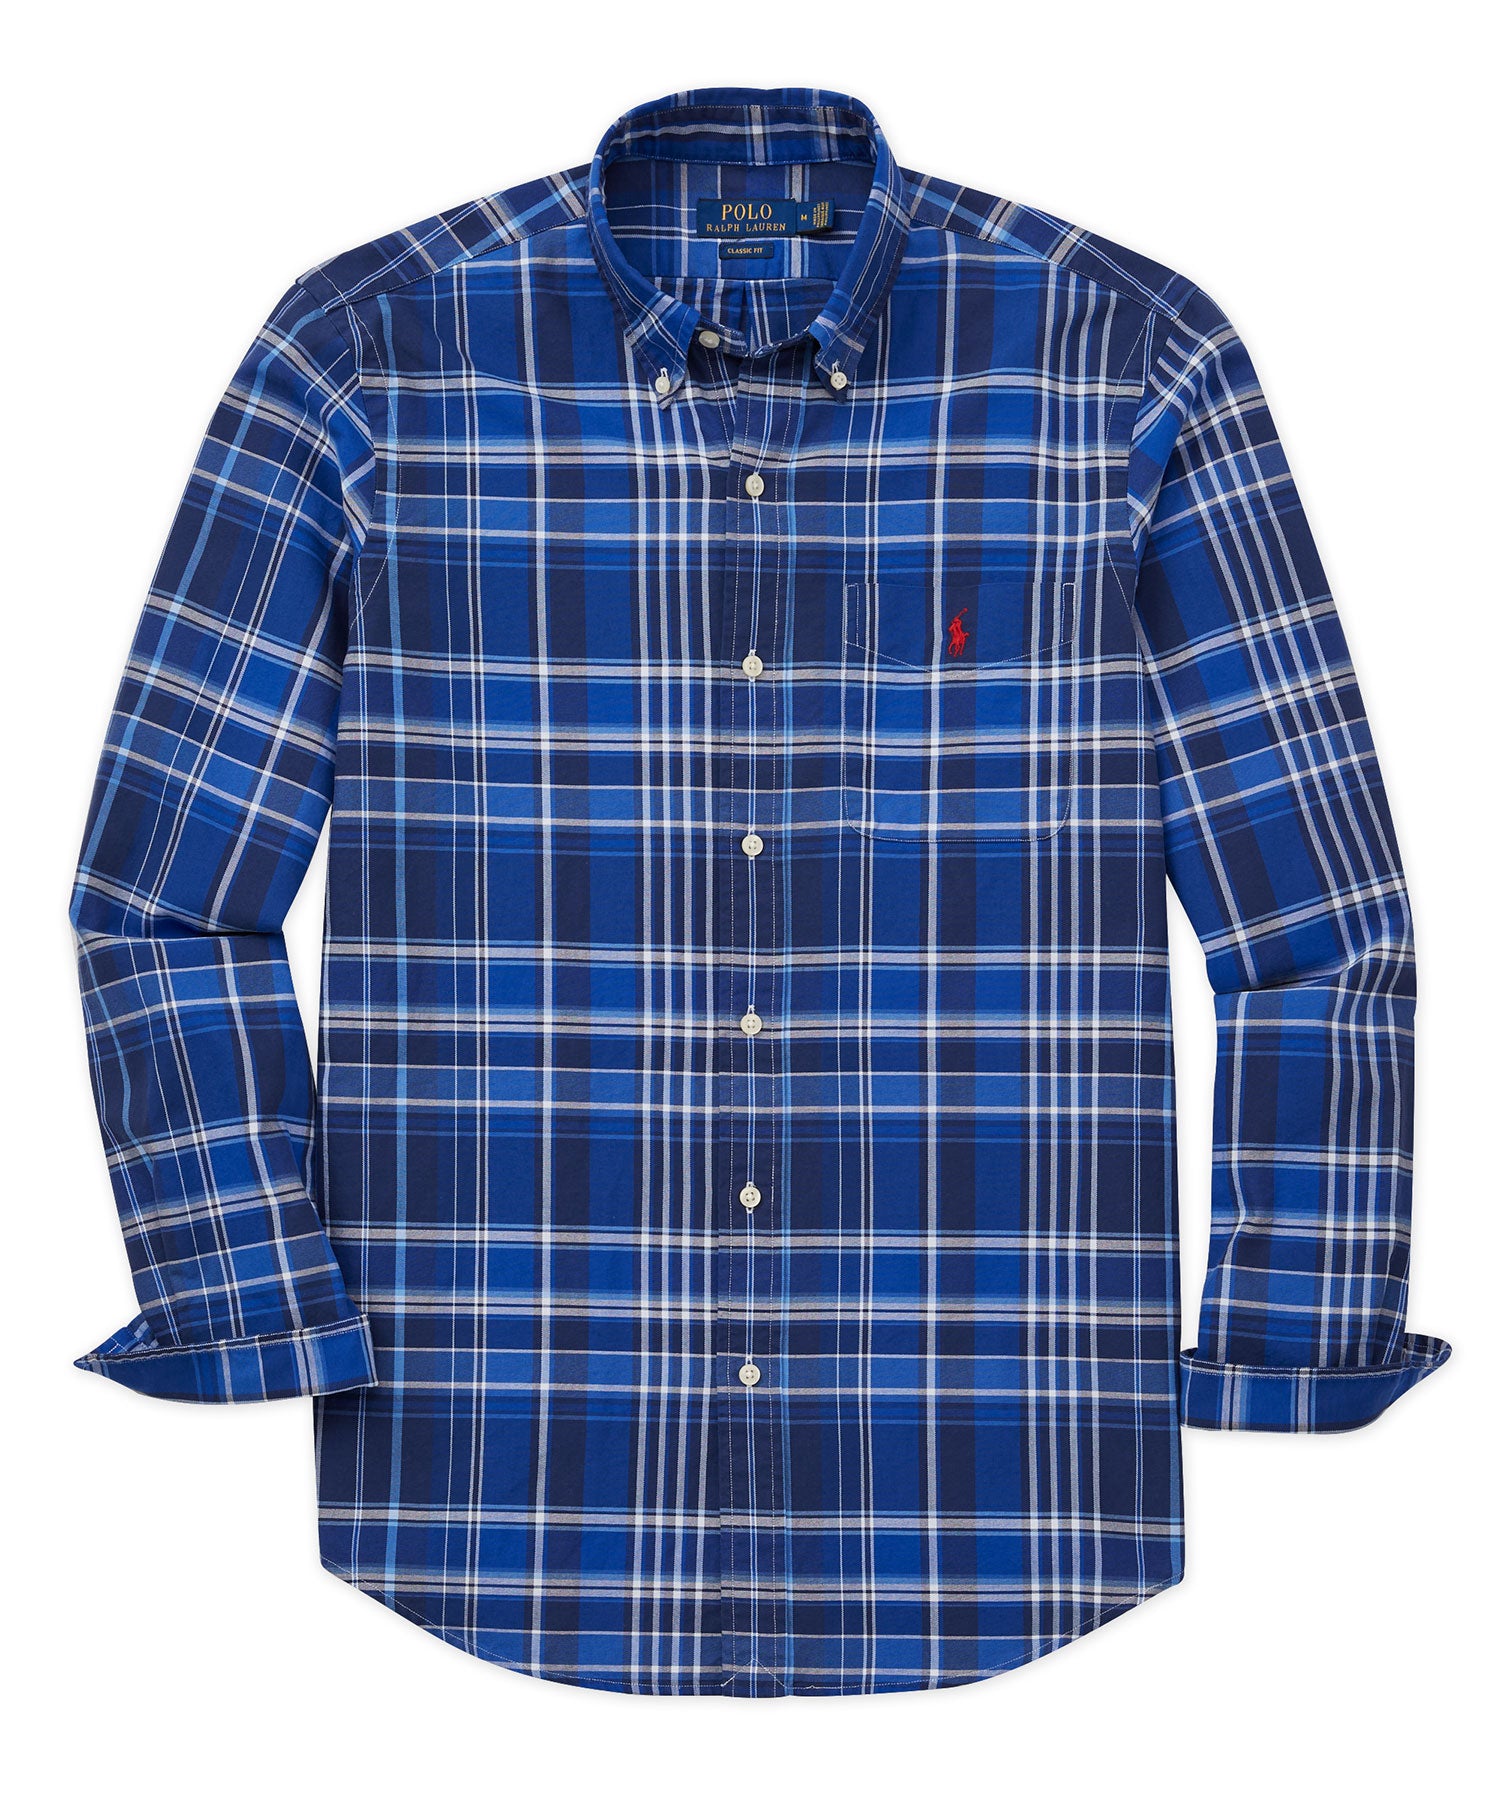 Ralph Lauren Polo Country flannel 3XB 3TG men's  Ralph lauren denim shirt,  Polo ralph lauren sale, Red plaid flannel shirt